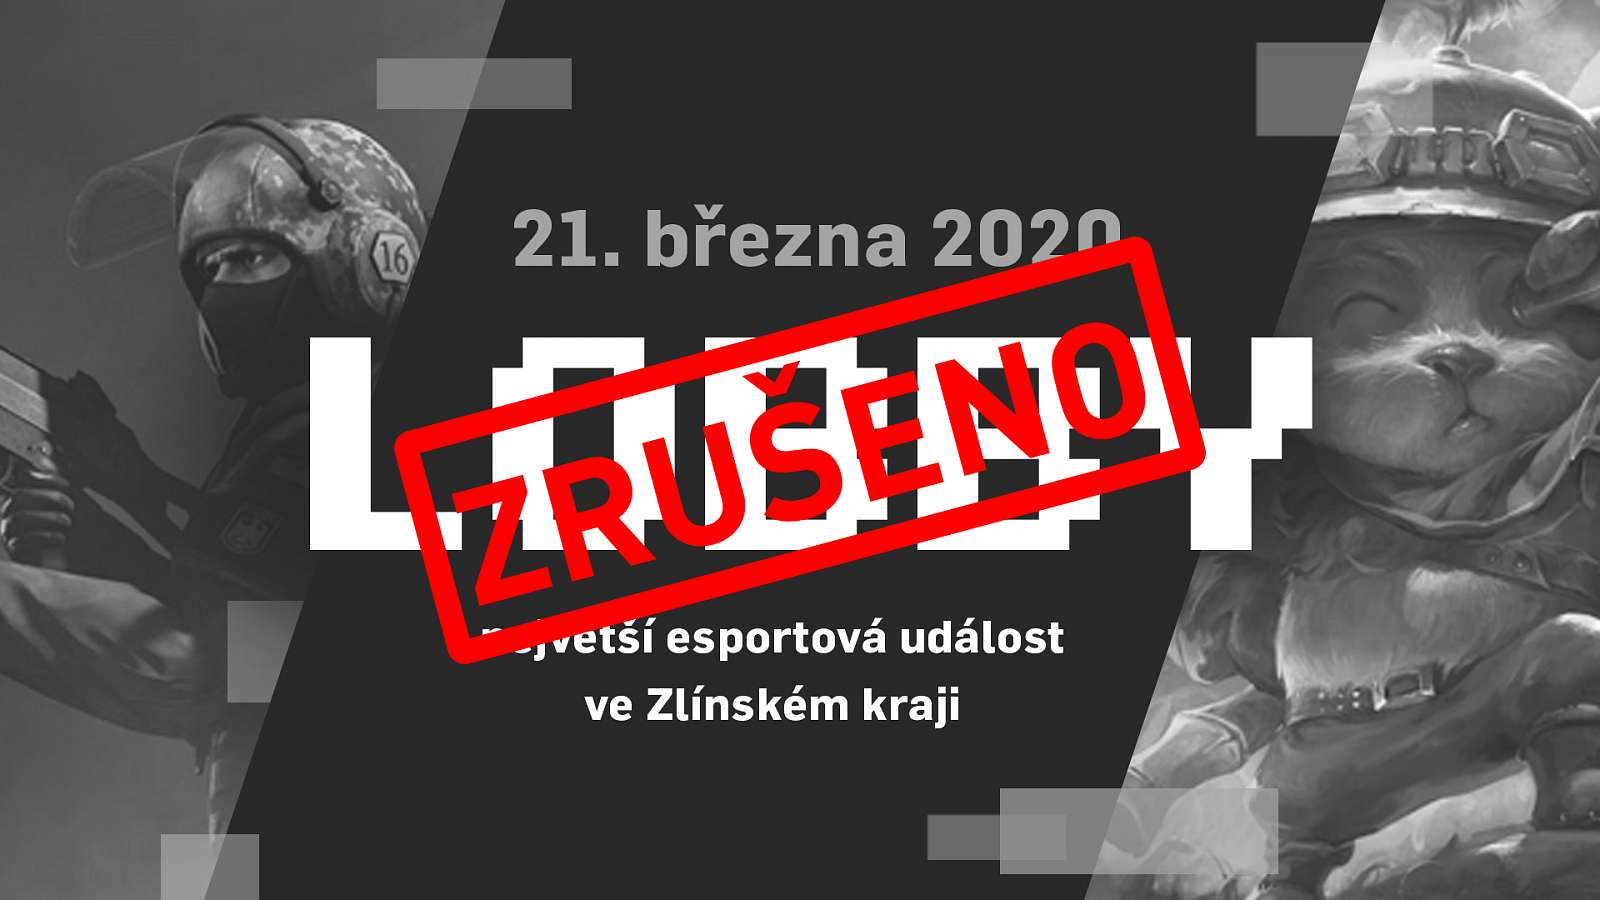 Koronavirus si vyžádal první českou oběť: turnaj LOBBY 2020